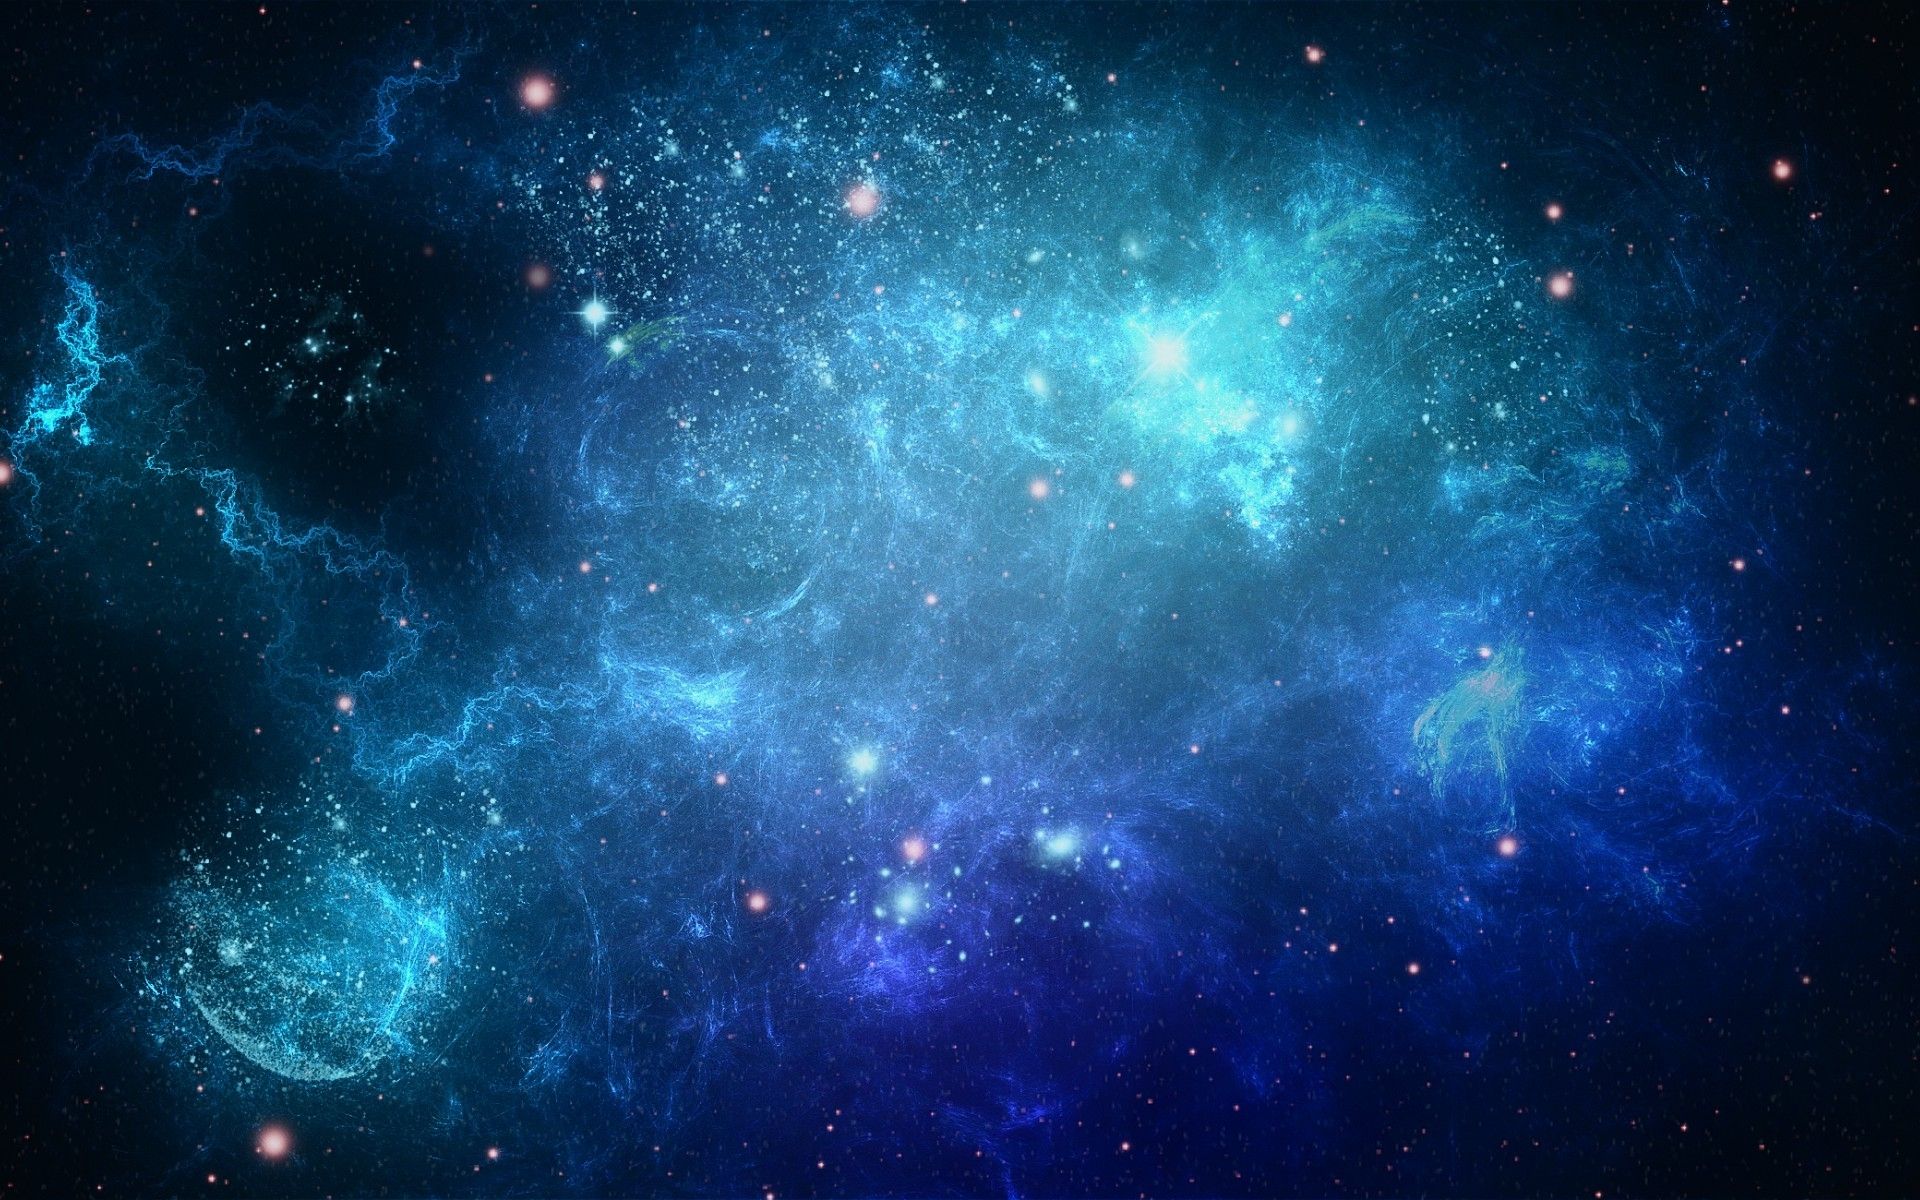 nouveau fond d'écran galaxy,cosmos,ciel,galaxie,bleu,atmosphère